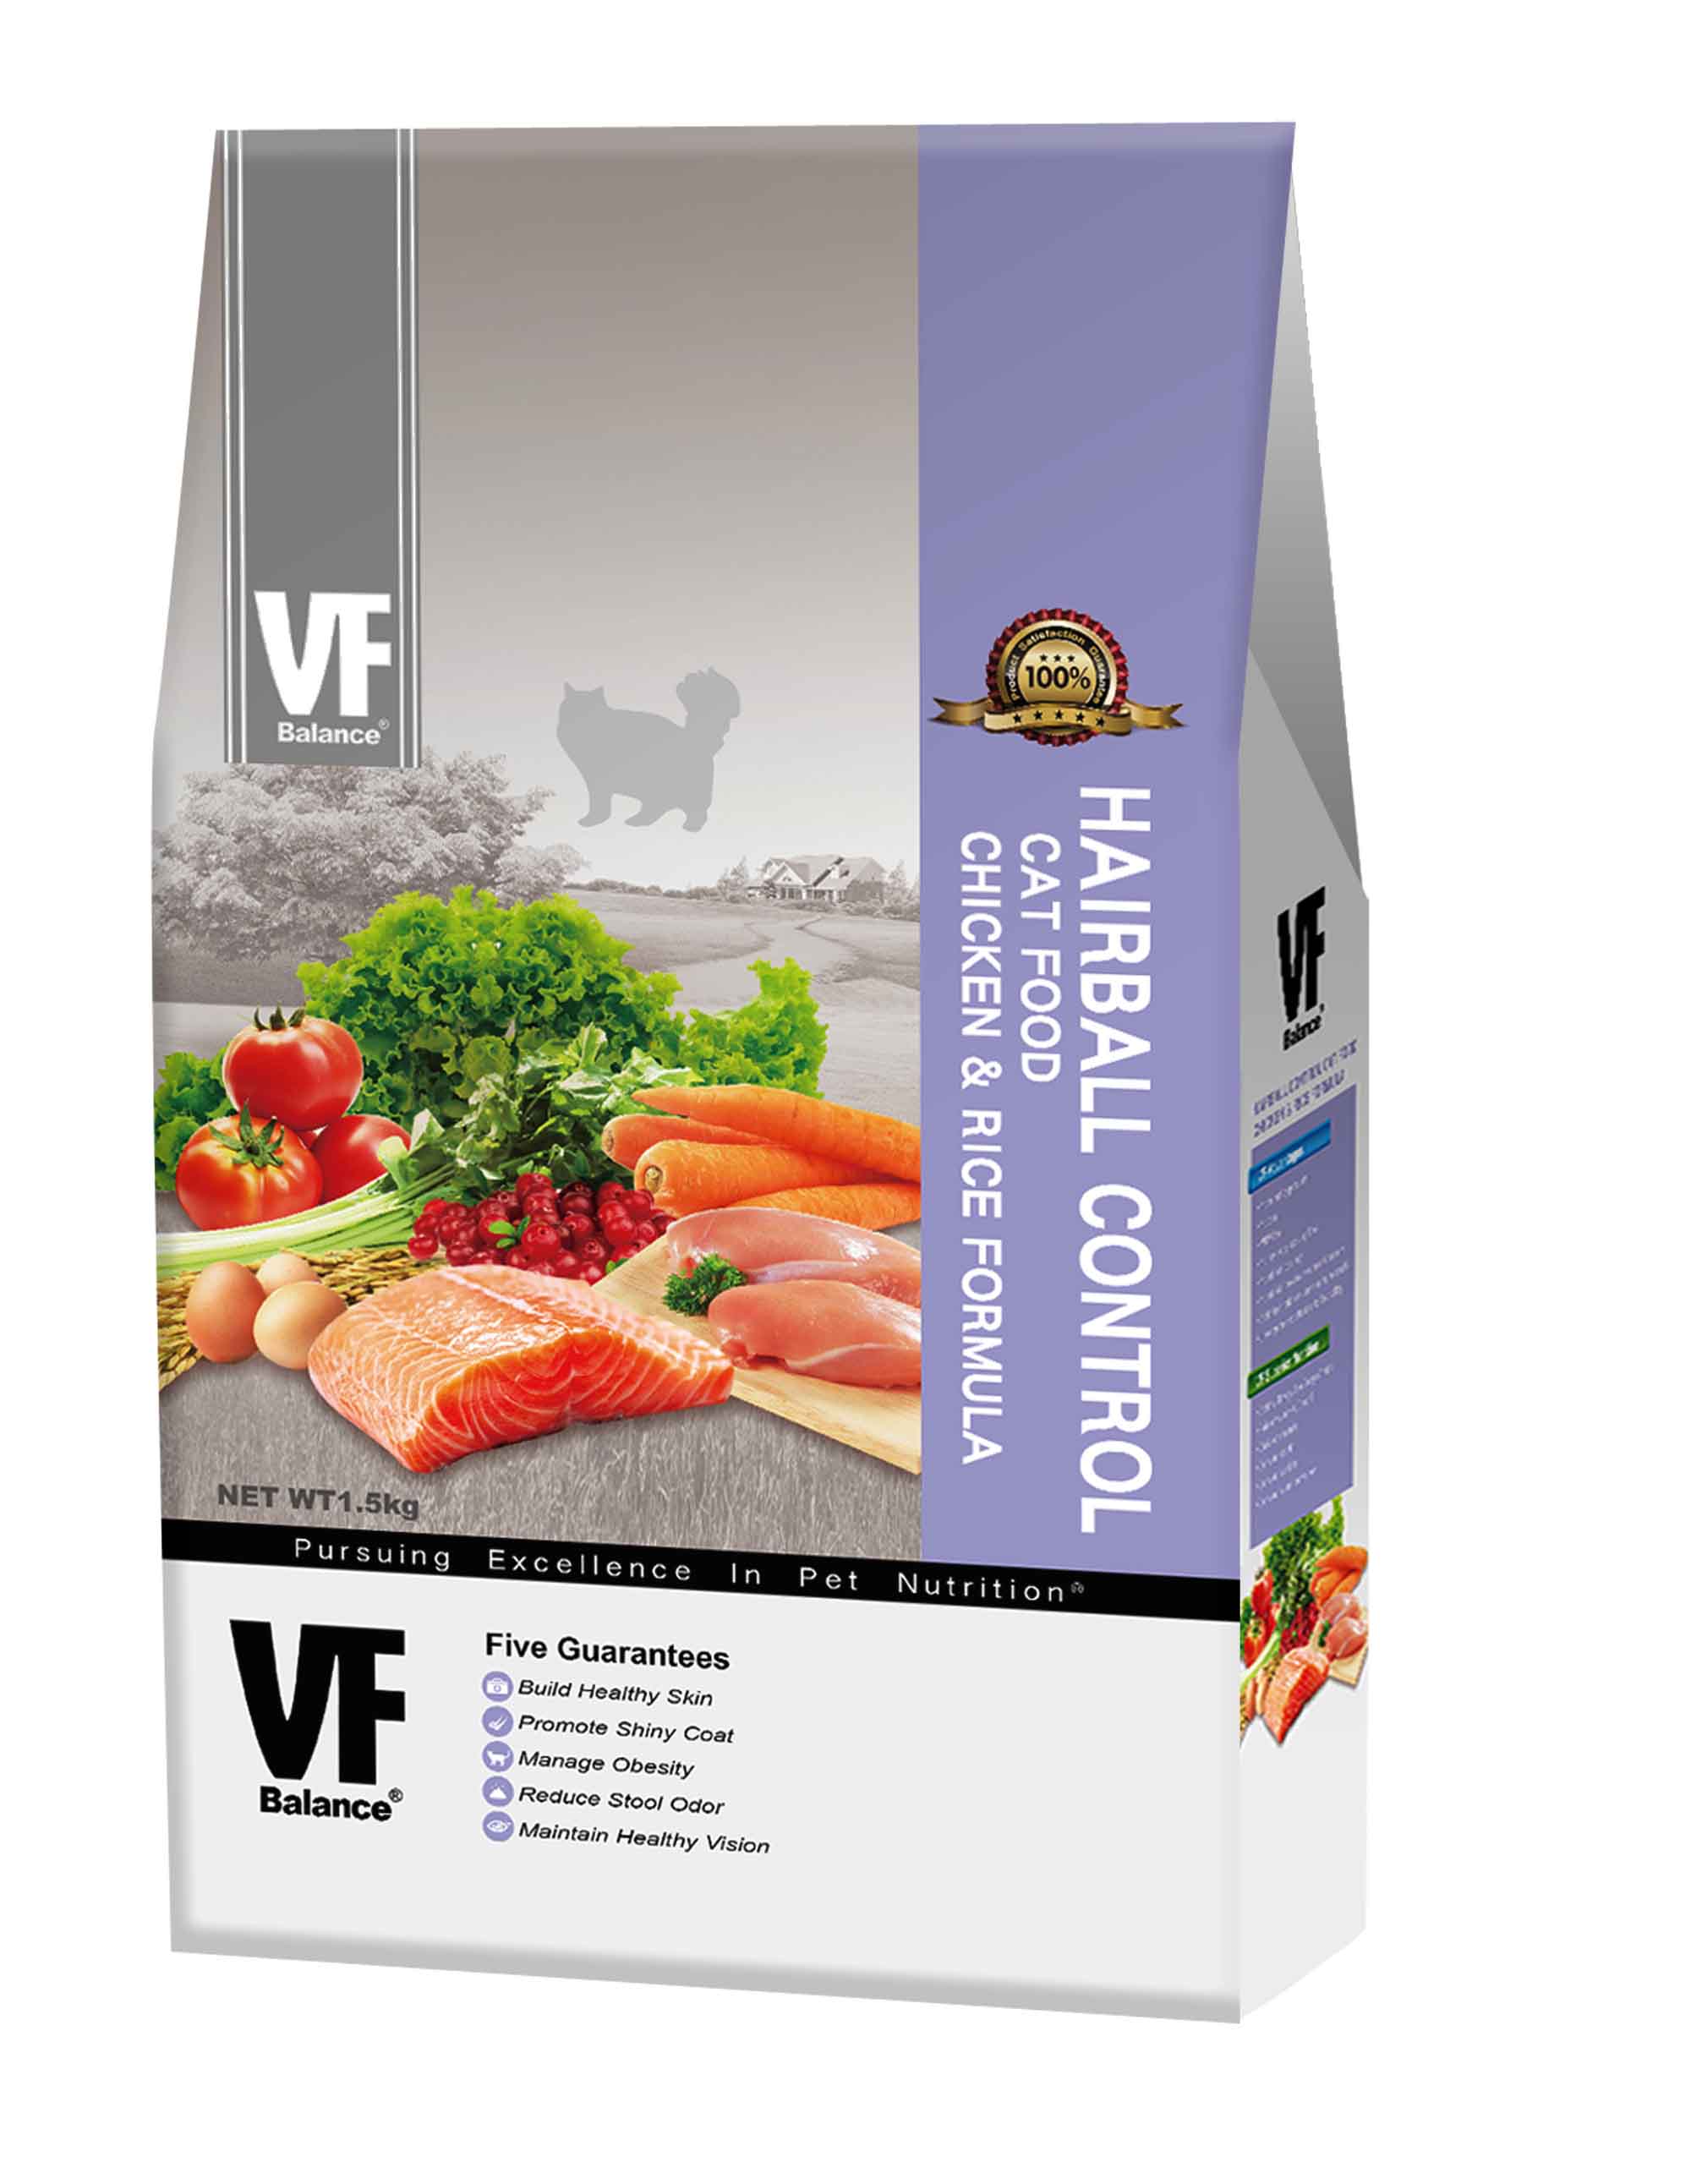 魏大夫特選成貓化毛配方(雞肉+米)
VF Hairball Control Cat Food Chicken & Rice Formula